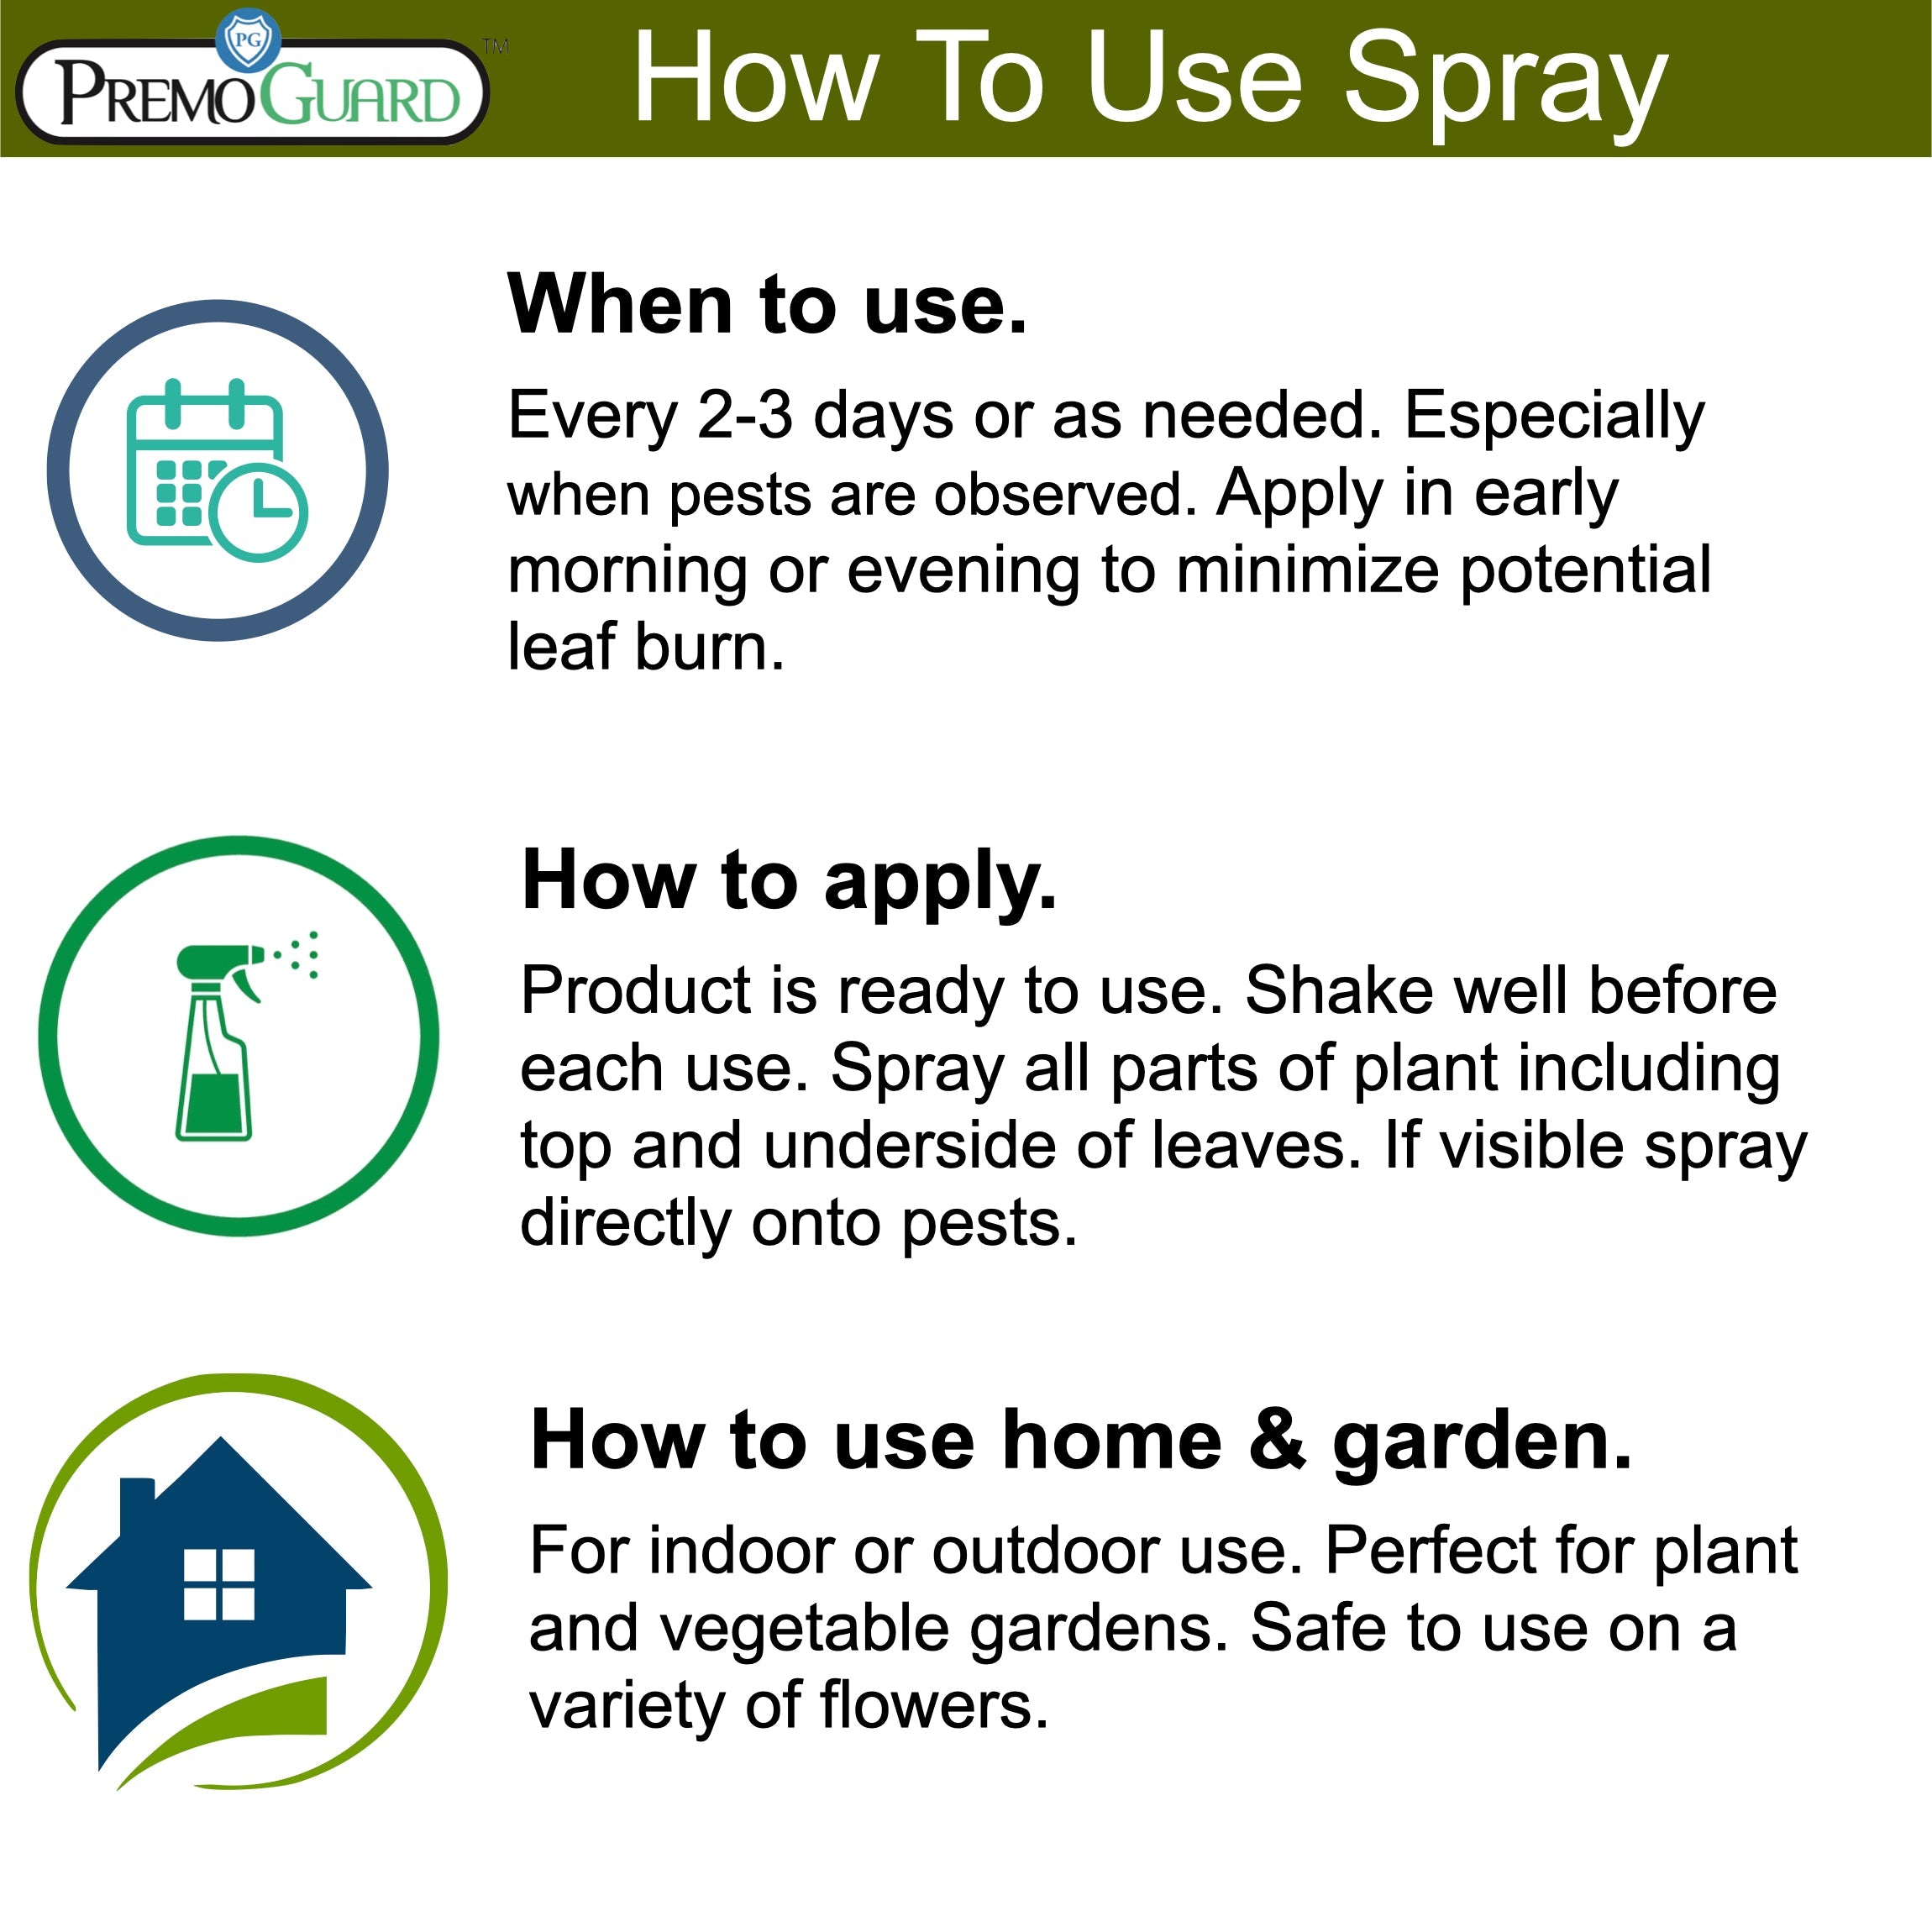 Plant and Garden Pest Spray by Premo Guard - 32 oz